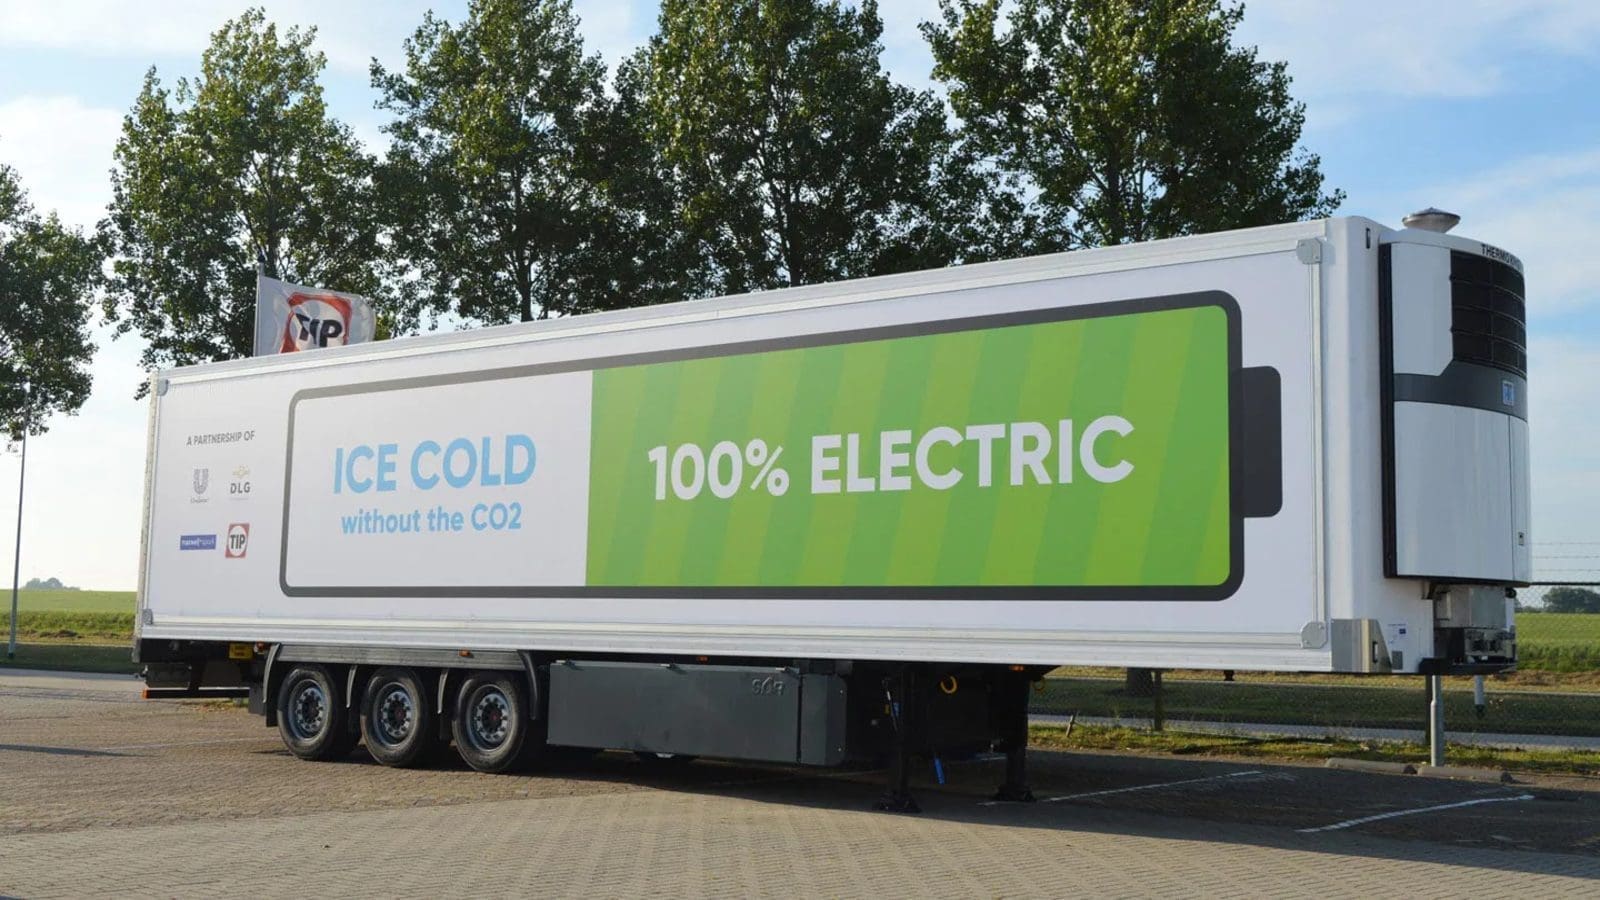 Unilever trials Zero-emission refrigeration on trucks  in drive towards carbon-free future